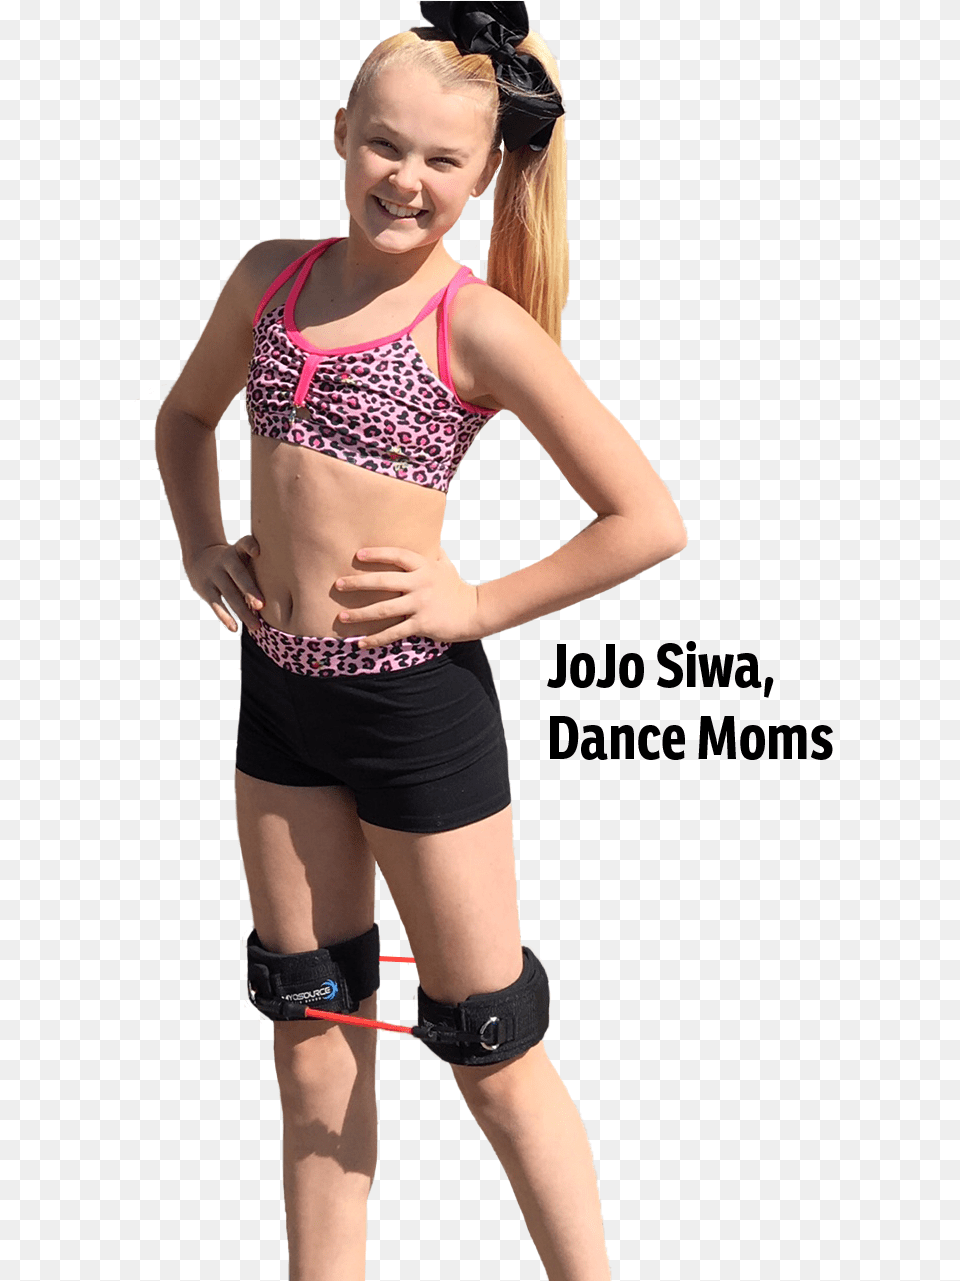 Jojo Siwa Of Dance Moms Fame Wearing Myosource Kinetic Myosource Kinetic Bands, Shorts, Clothing, Adult, Swimwear Free Transparent Png